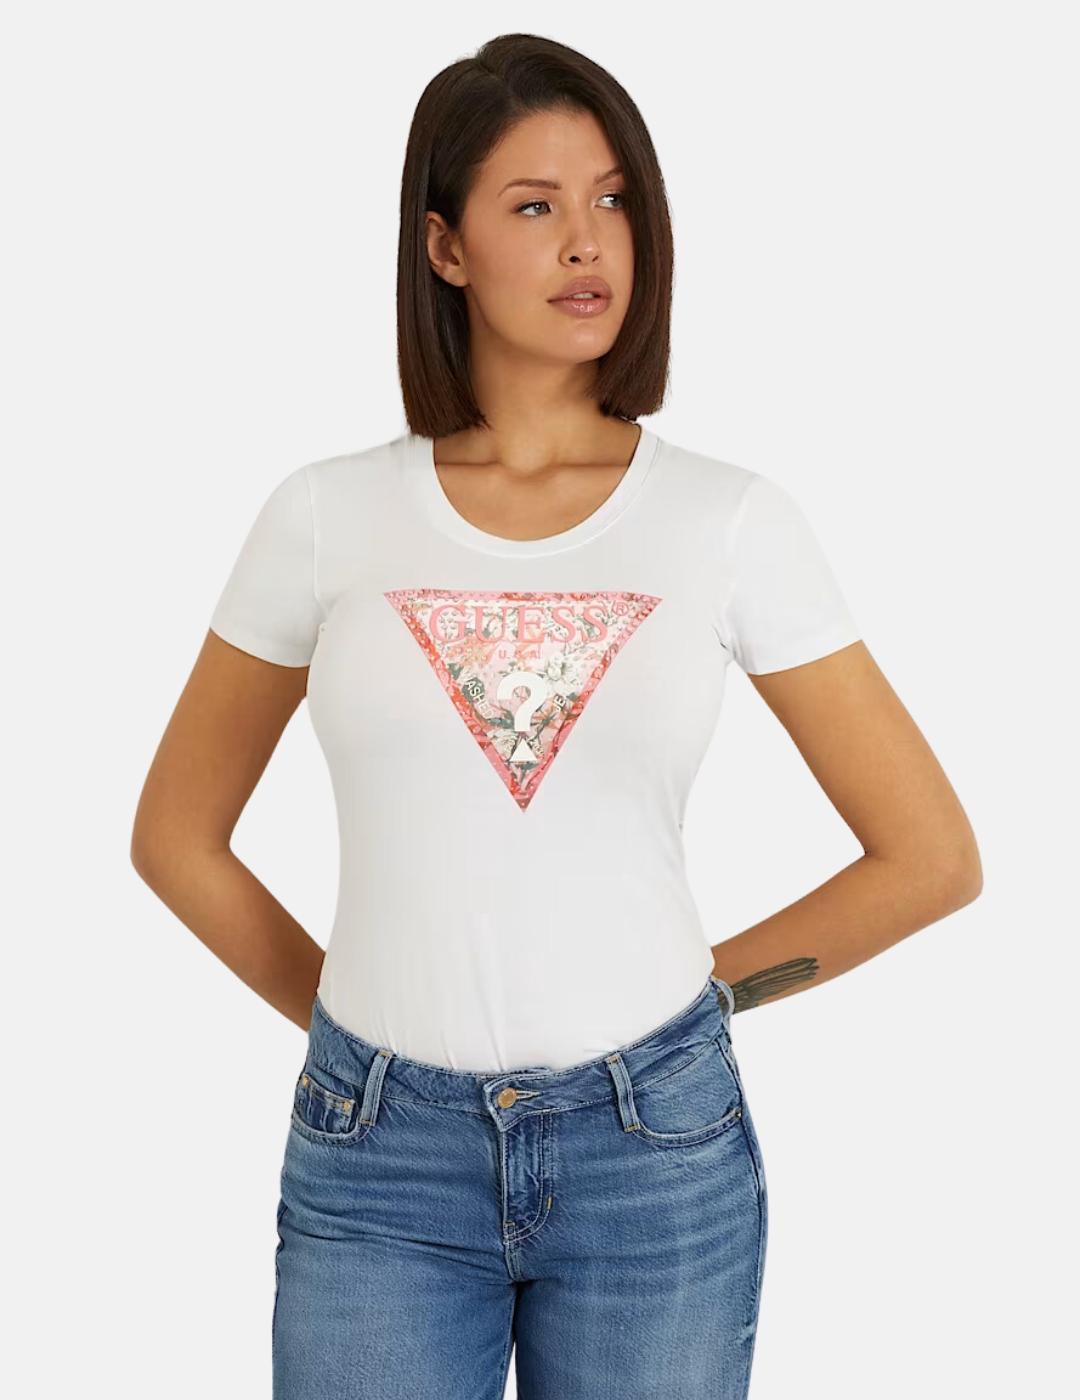 Camiseta Guess blanca satin triangle para mujer